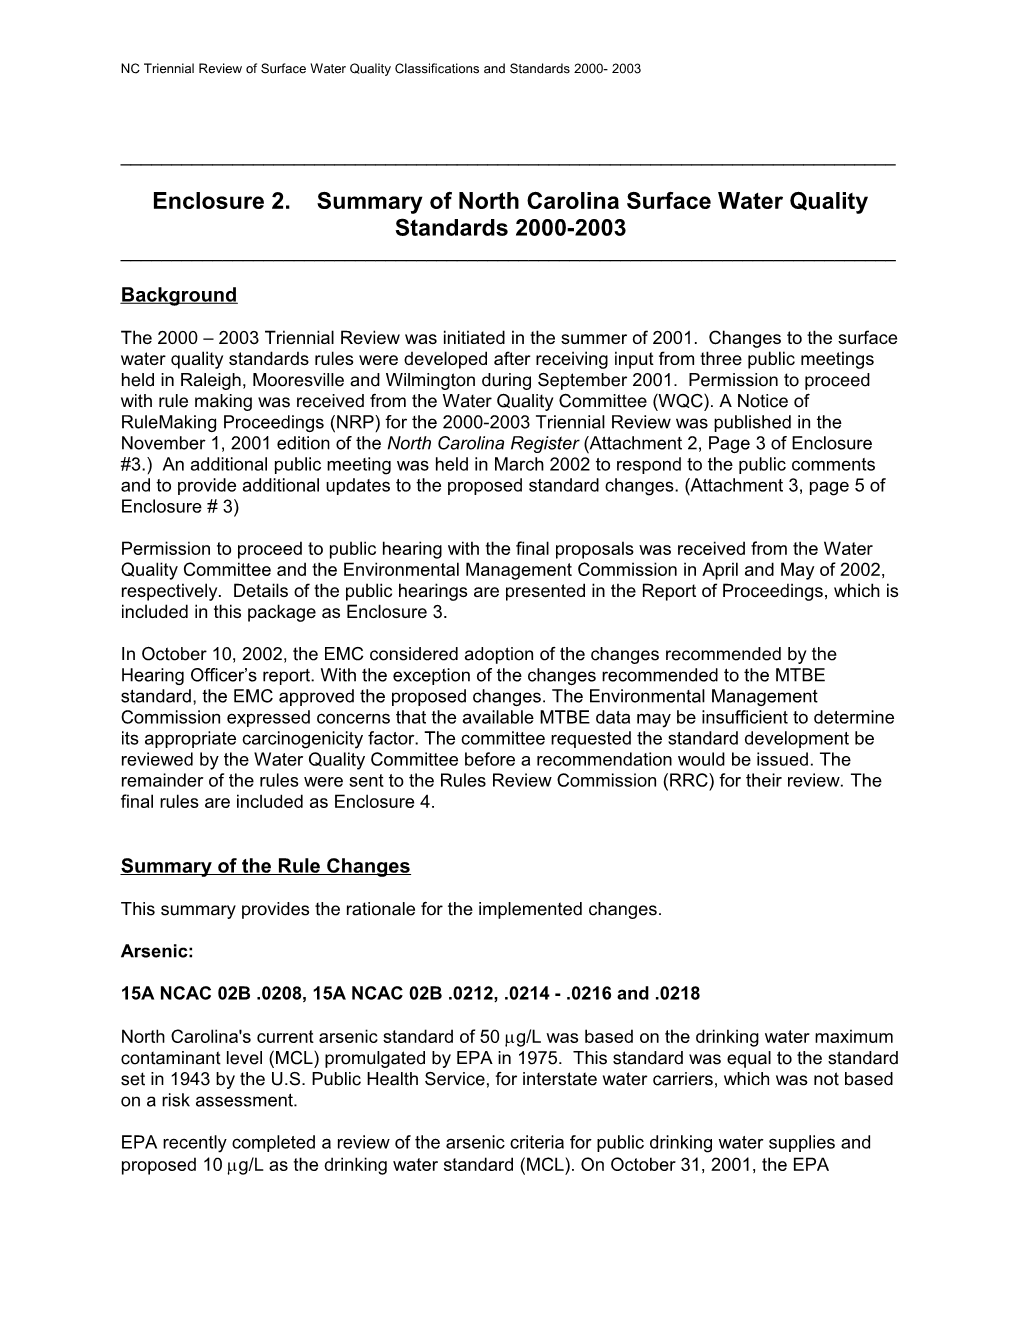 Enclosure 2. Summary of North Carolina Surface Water Quality Standards 2000-2003